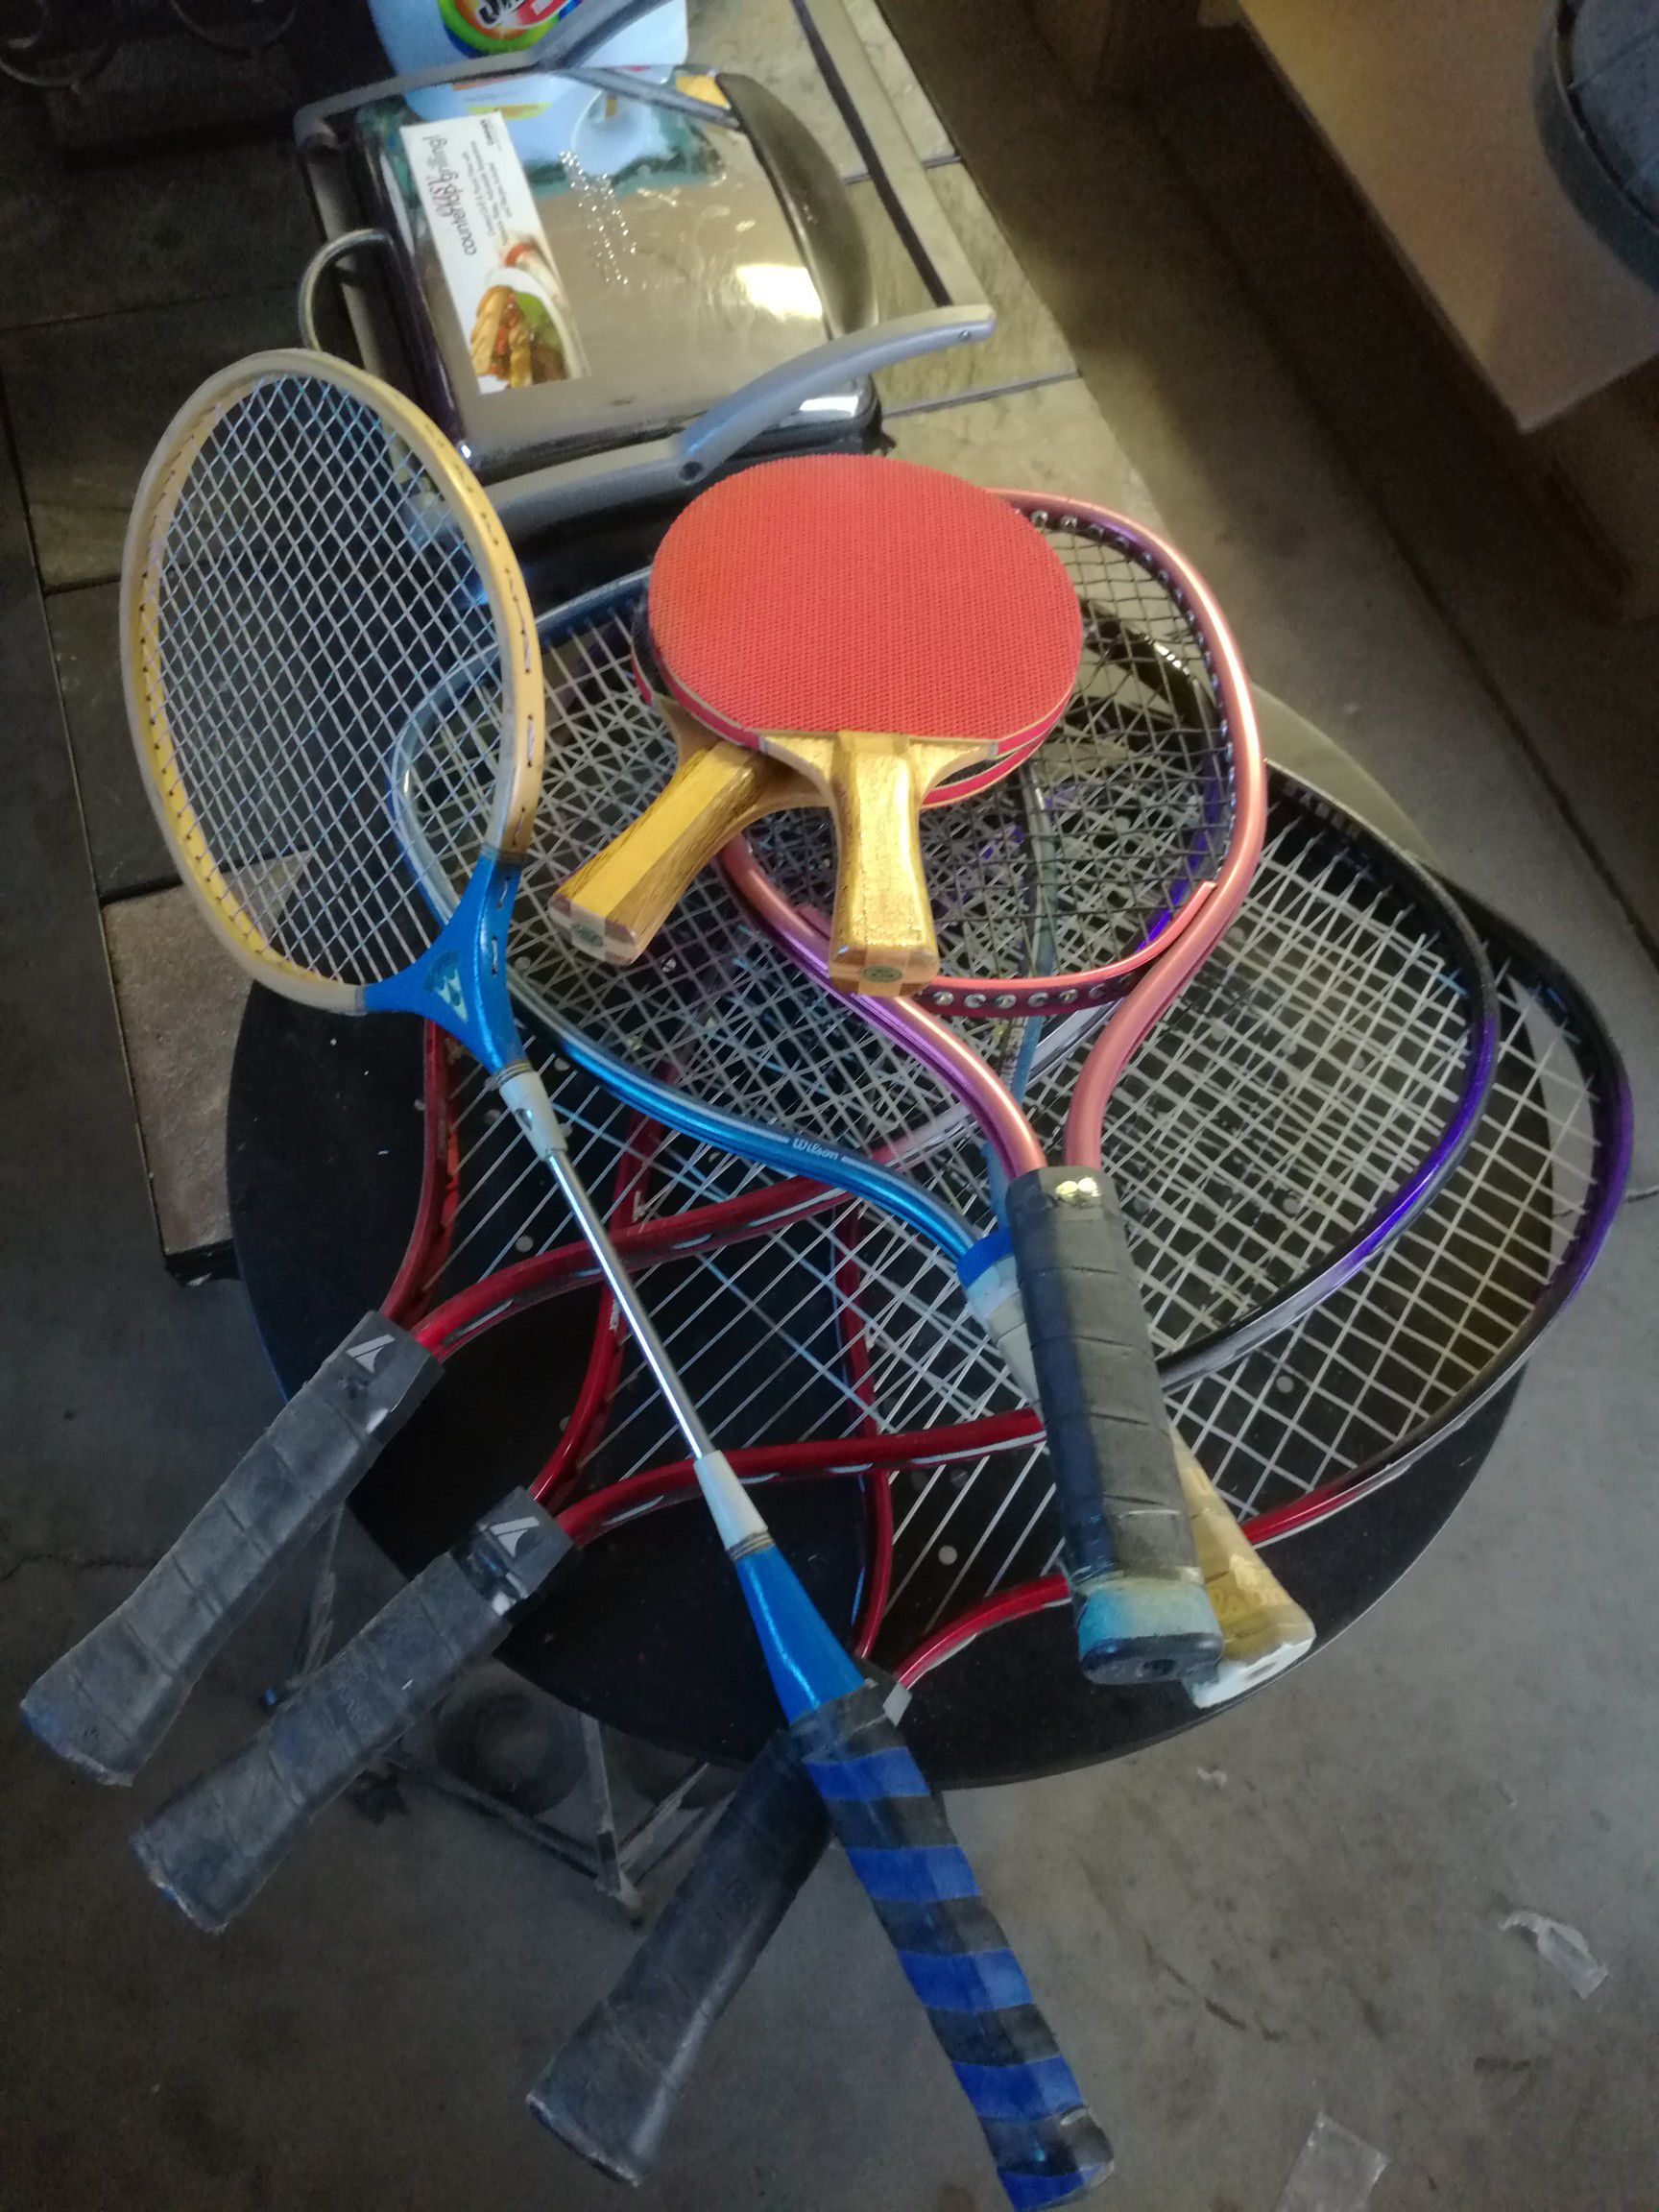 Tennis racket s / ping pong paddle s / badminton rackets